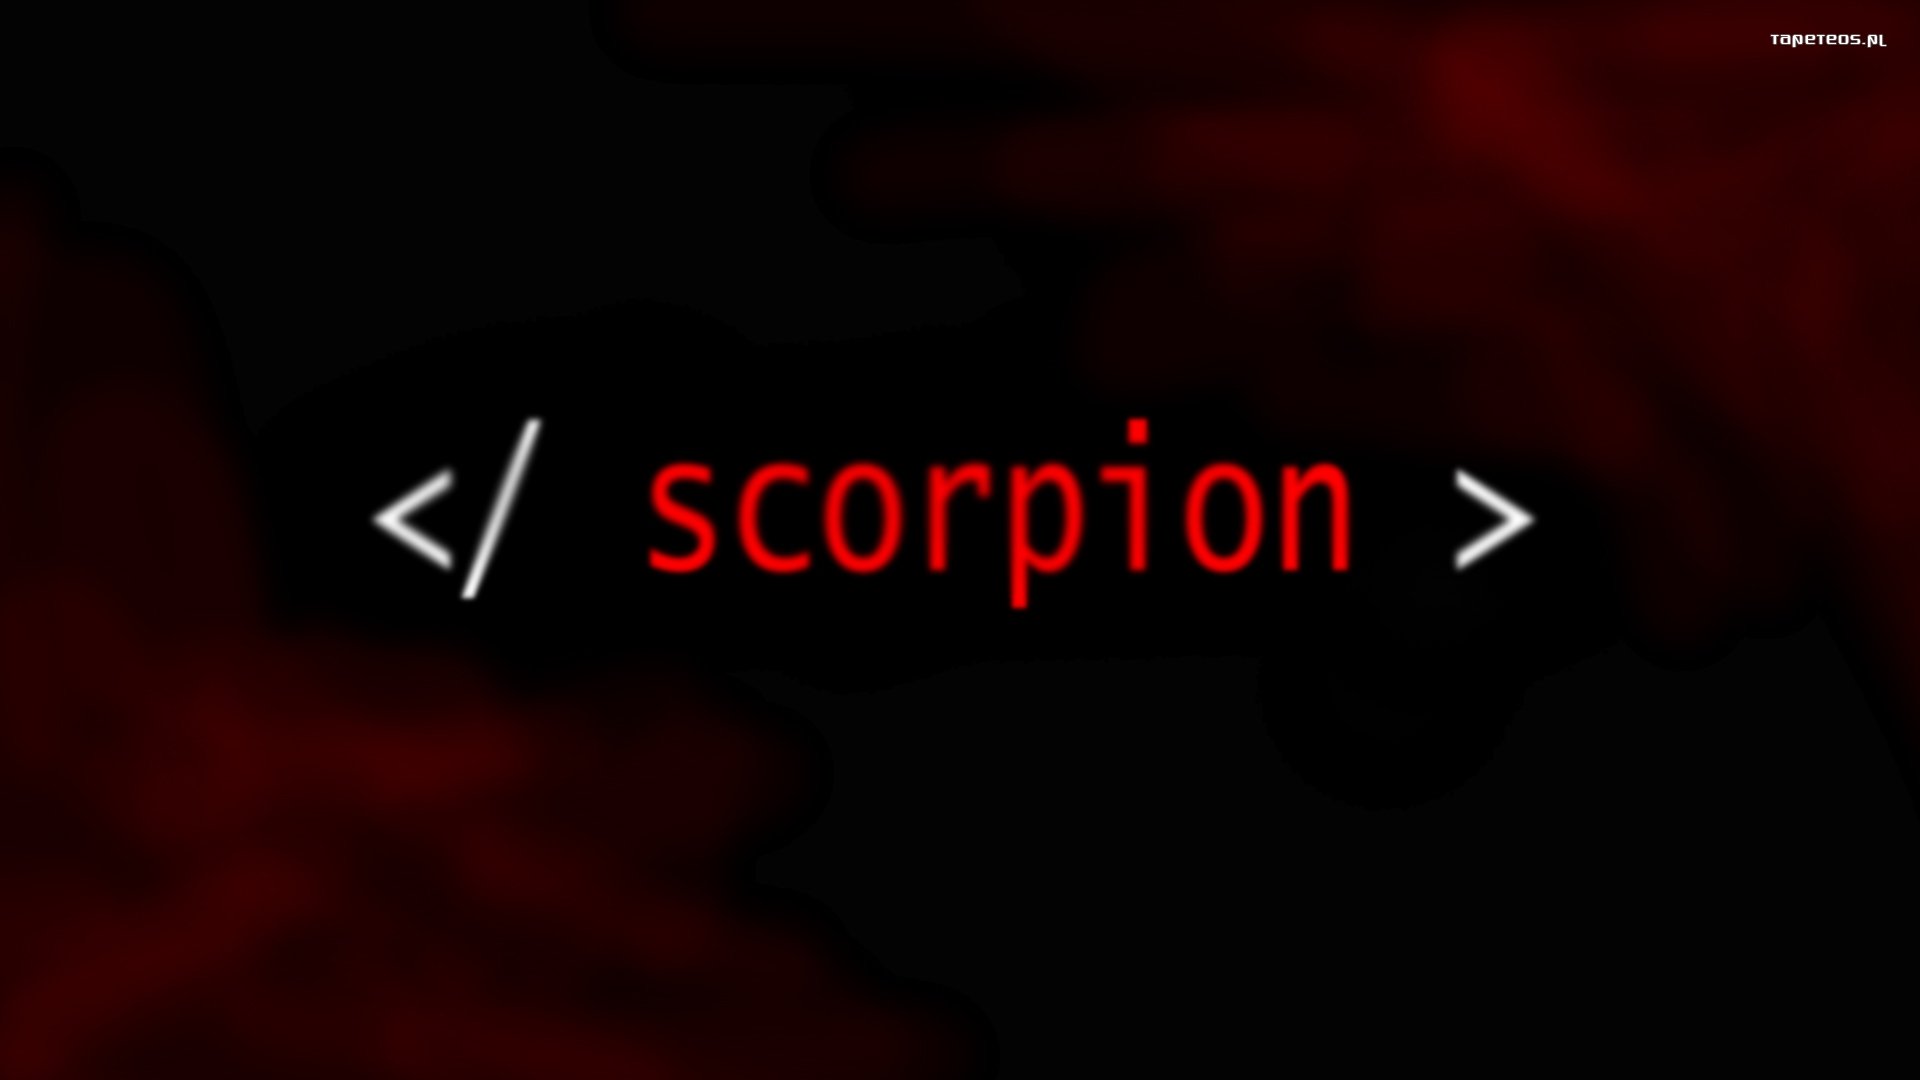 Skorpion 2014 TV Scorpion 002 Logo